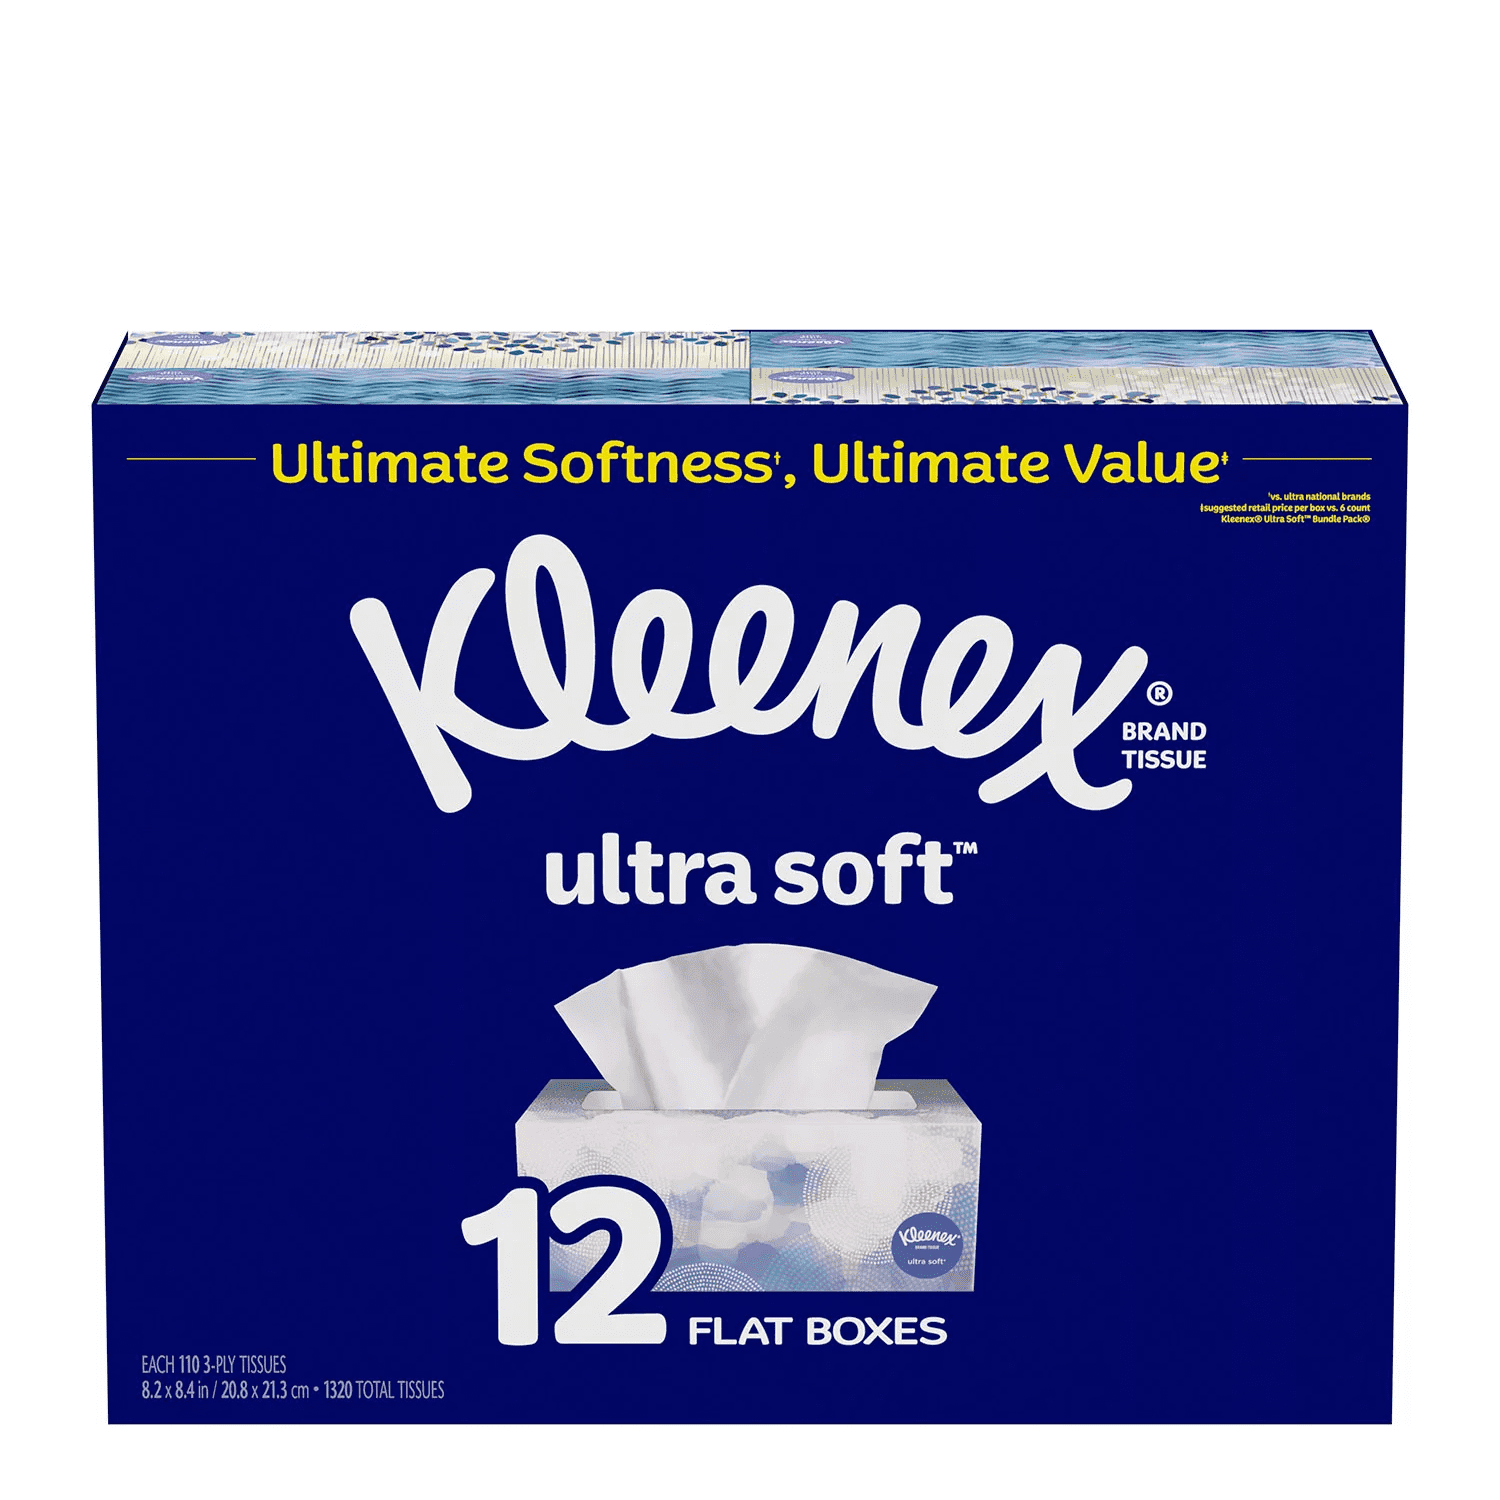 Kleenex Pocket Size Balsam Tissues 18 Packs Sheets Balm Care Soft Paper 